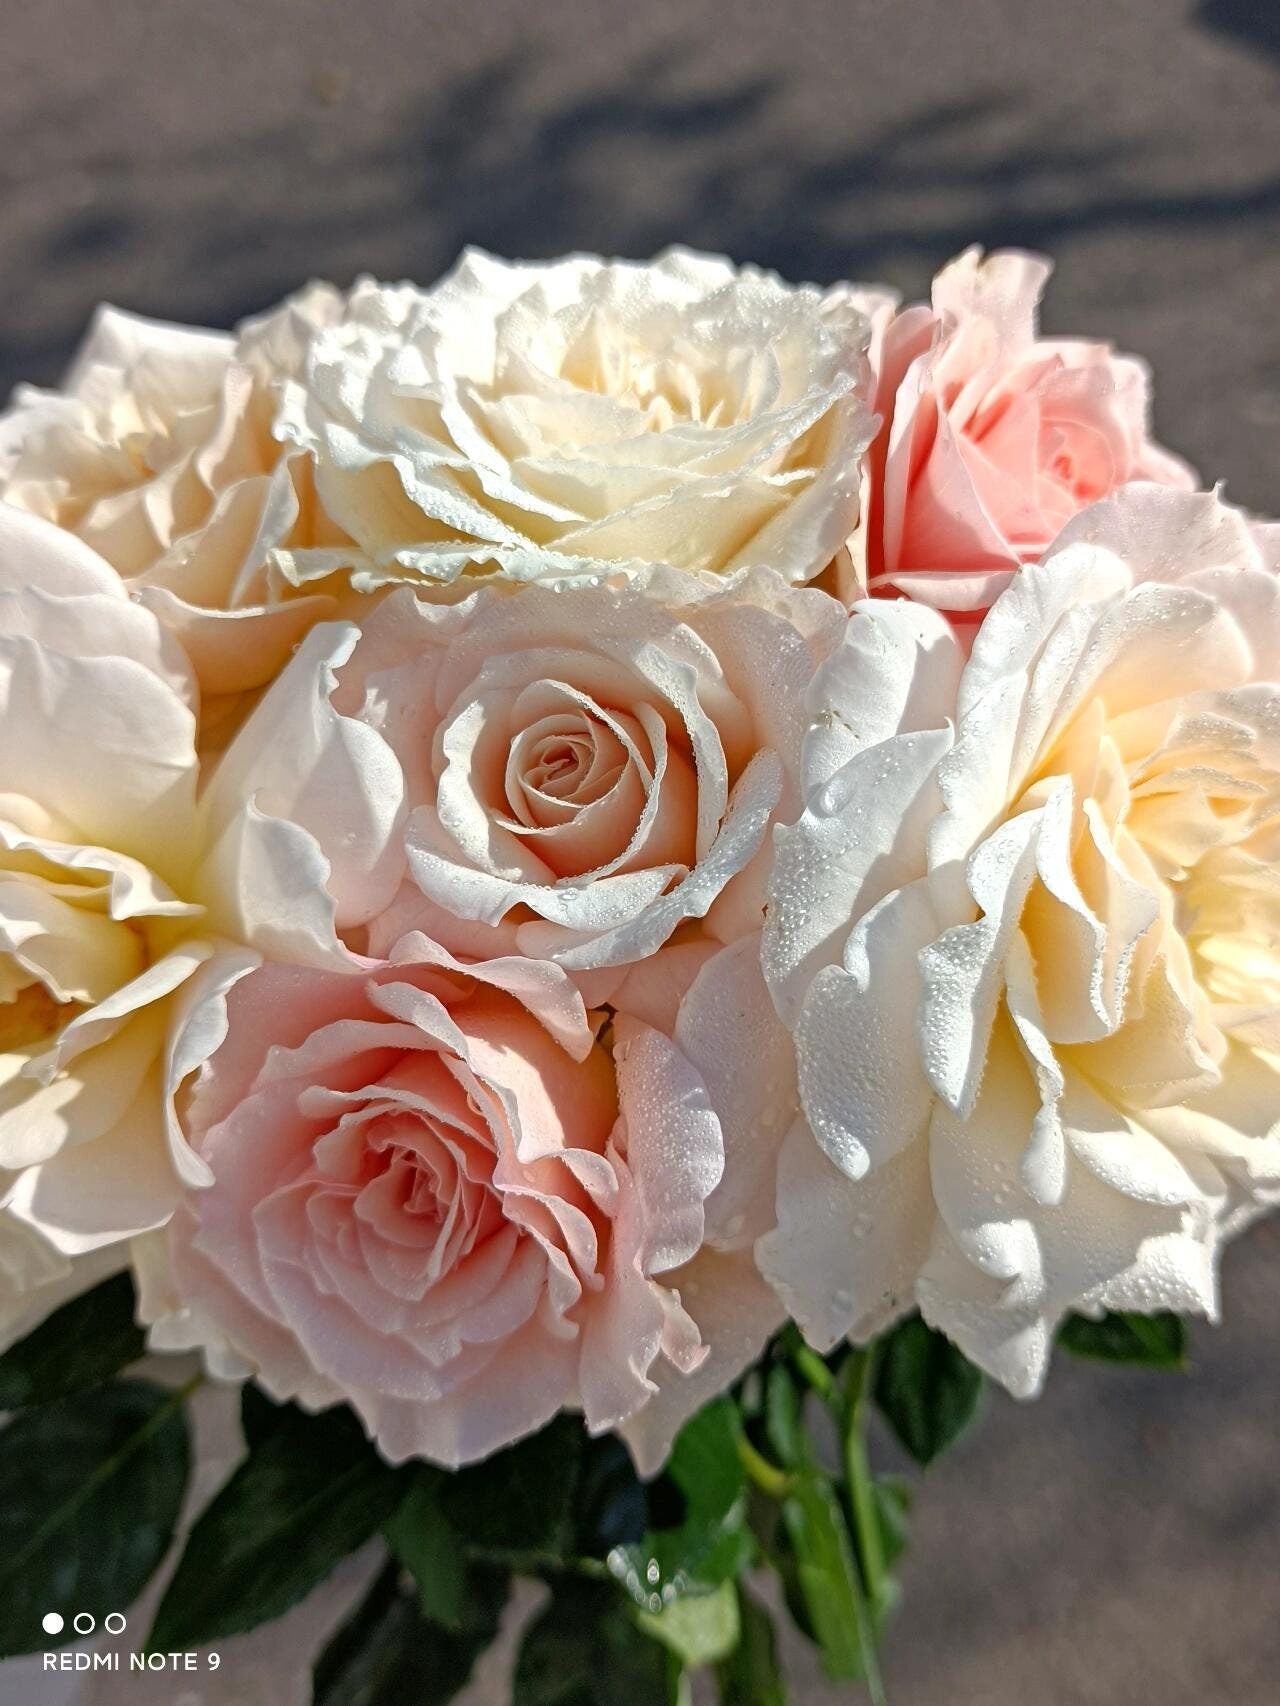 Trendy Rose【Chou Chou｜シュシュ】- 2 Gal OwnRoot LivePlant| Sumiko Kawamoto闪闪发光| Less Thorns| Redolent| Vivid colors| Beginner-Friendly| Exquisite